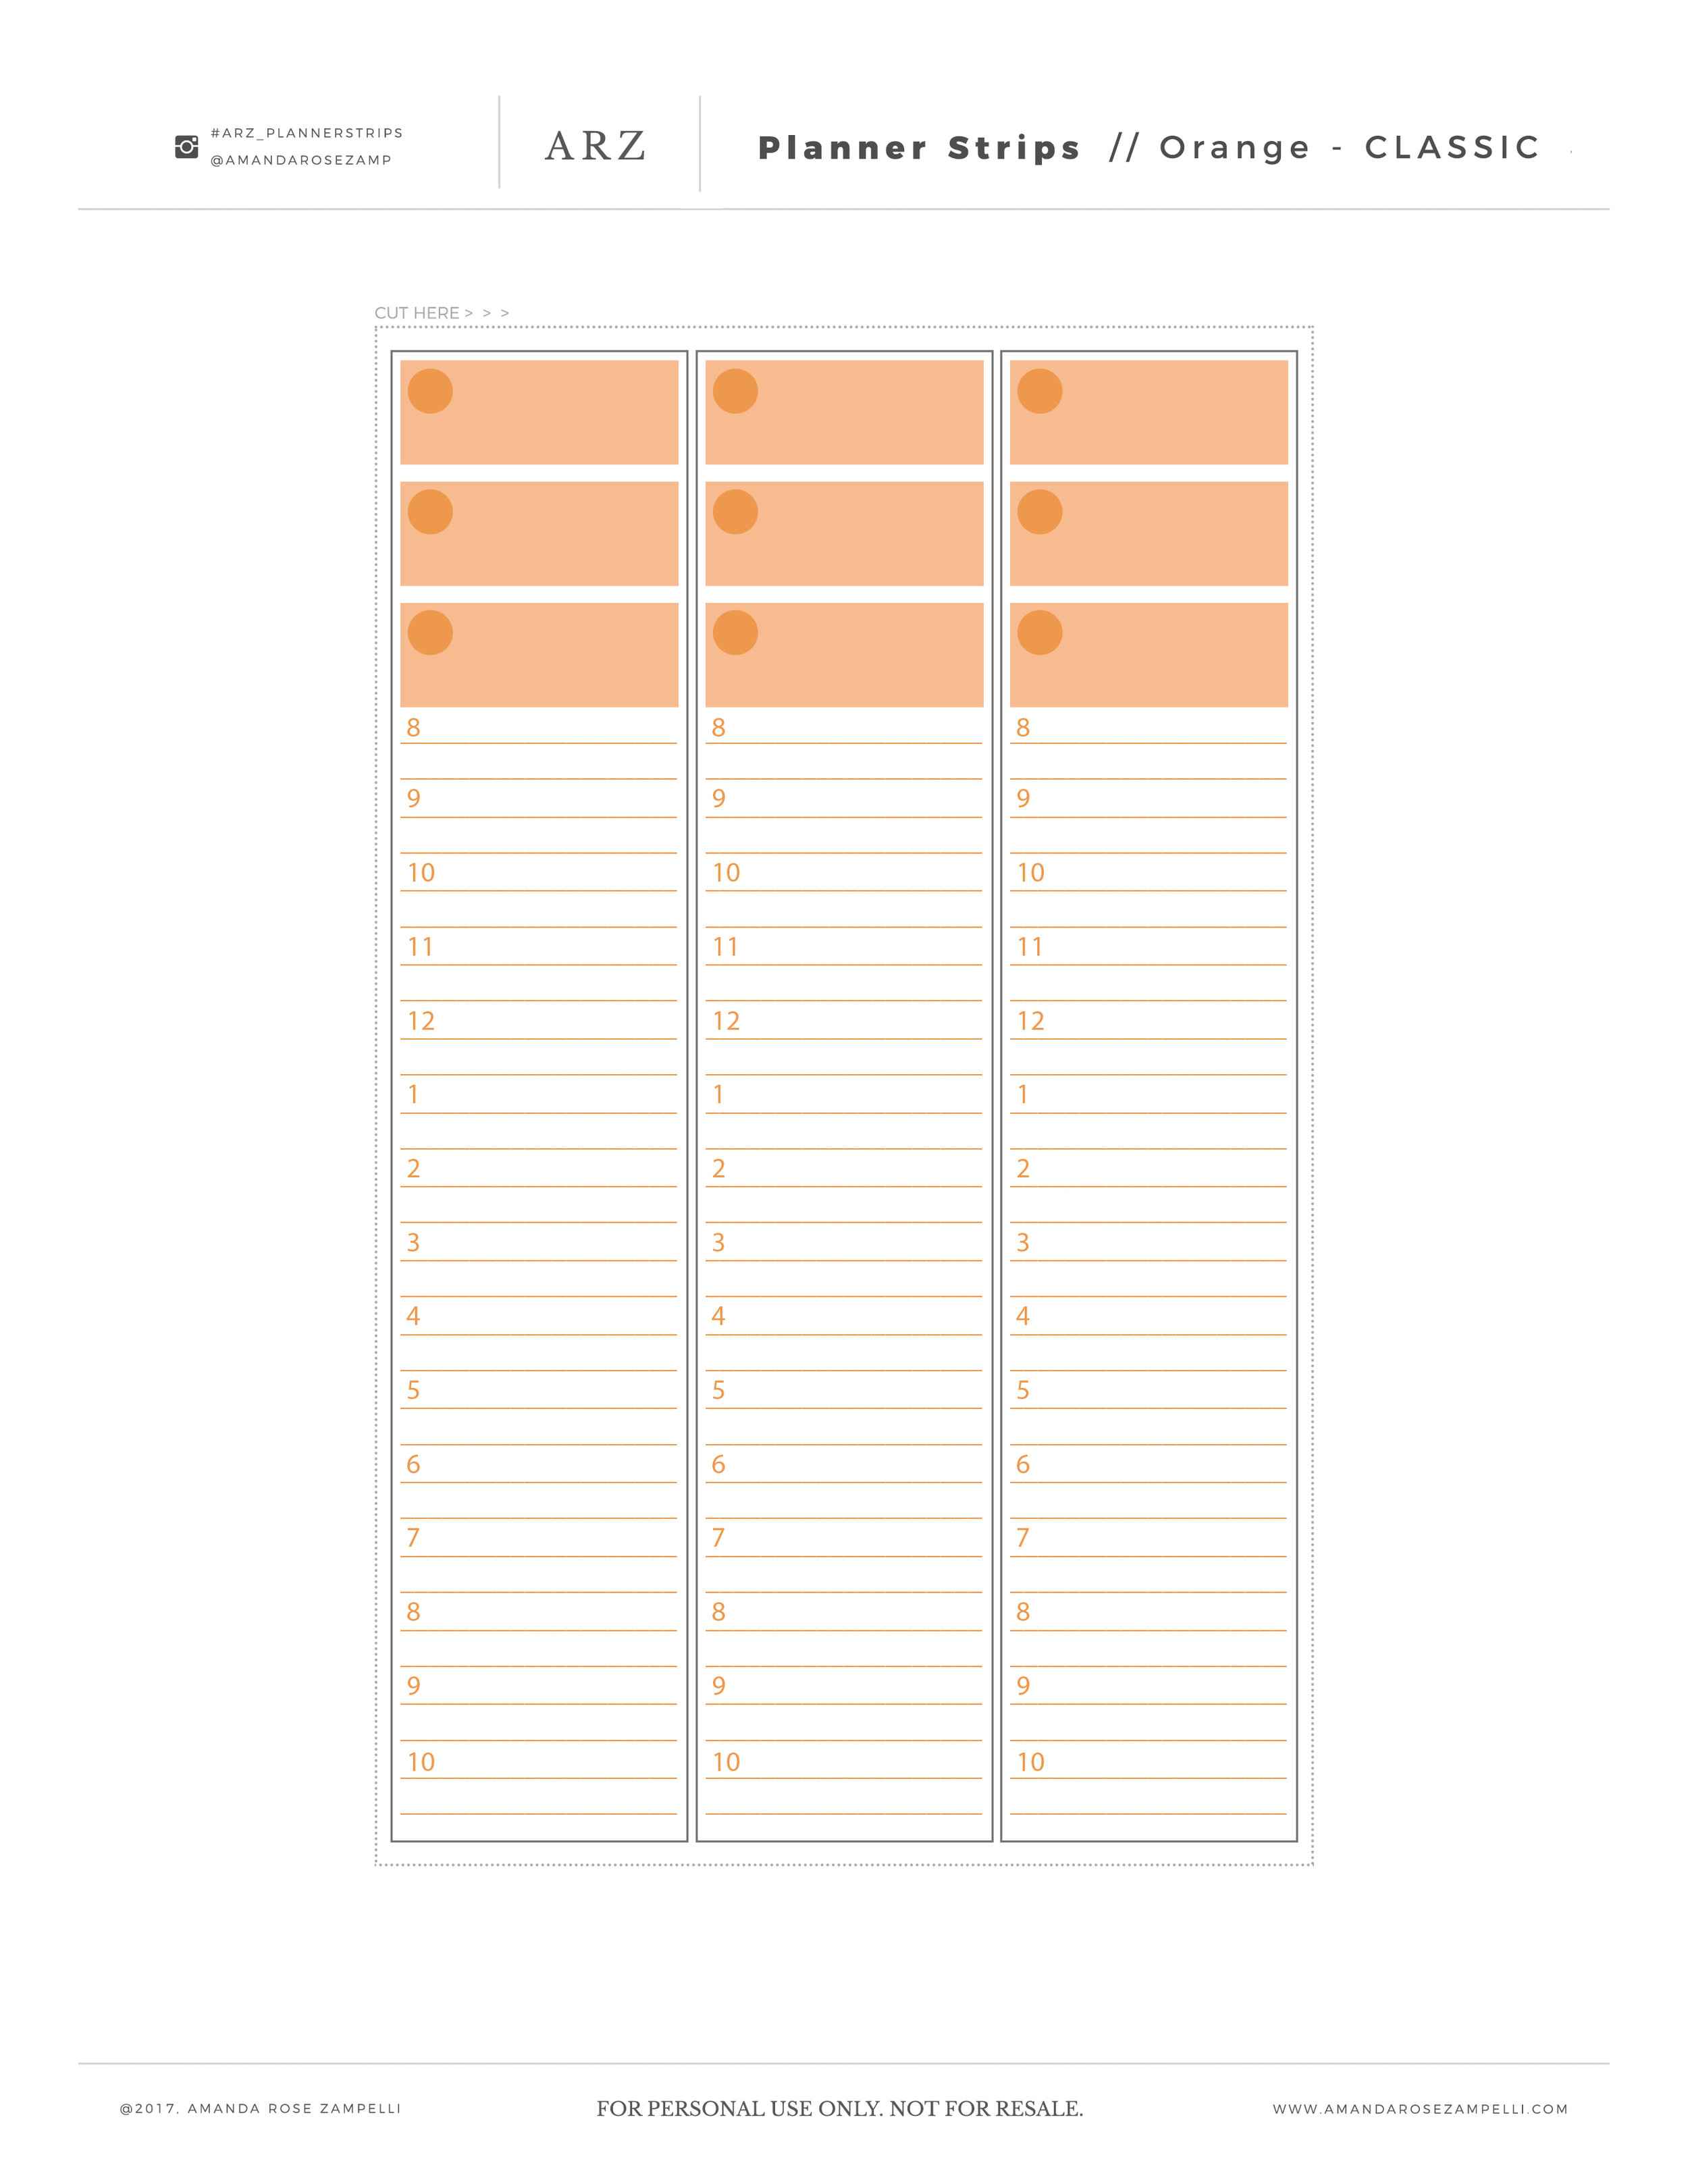 01 CLASSIC orange M - W planner strips.jpg